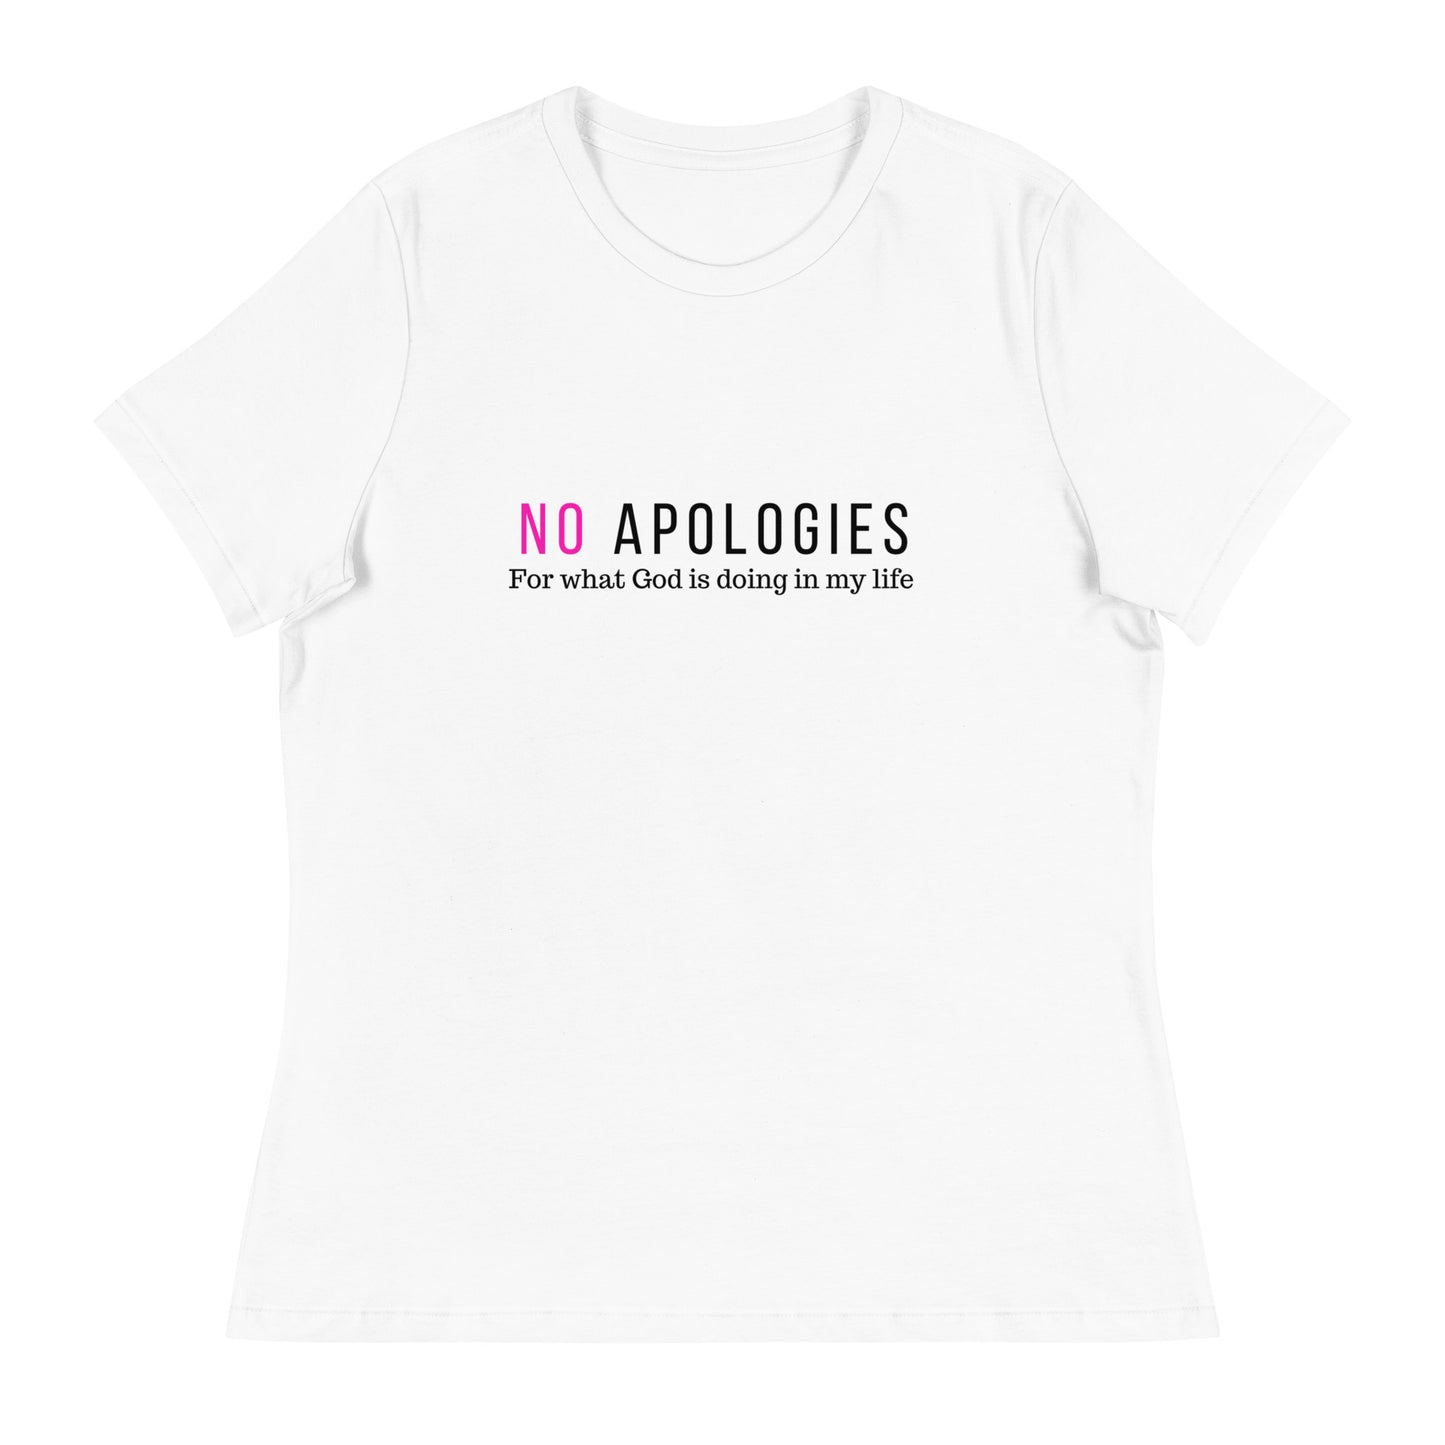 No Apologies T-Shirt